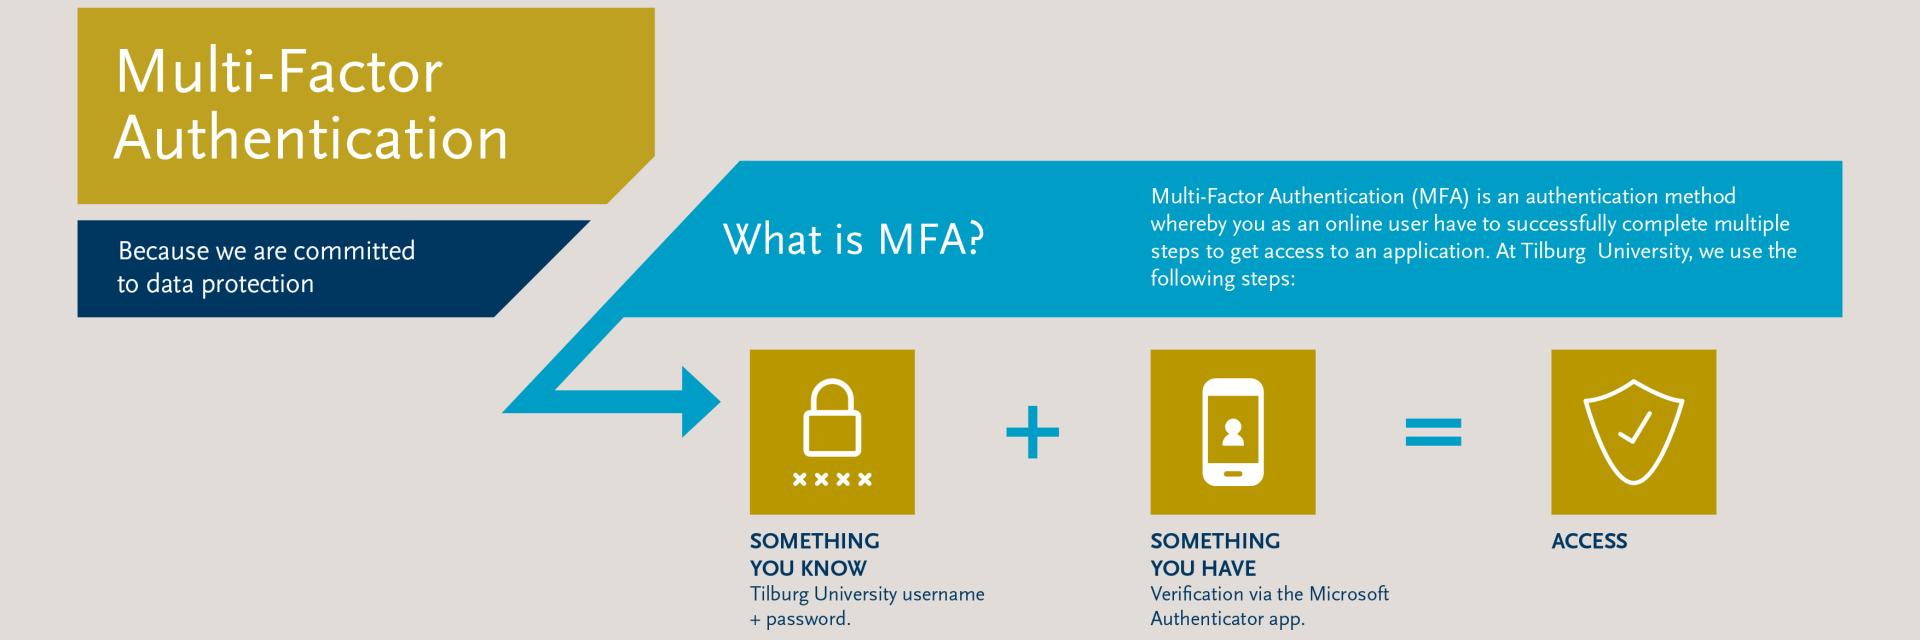 What is Multi-Factor Authentication (MFA) - Tilburg University